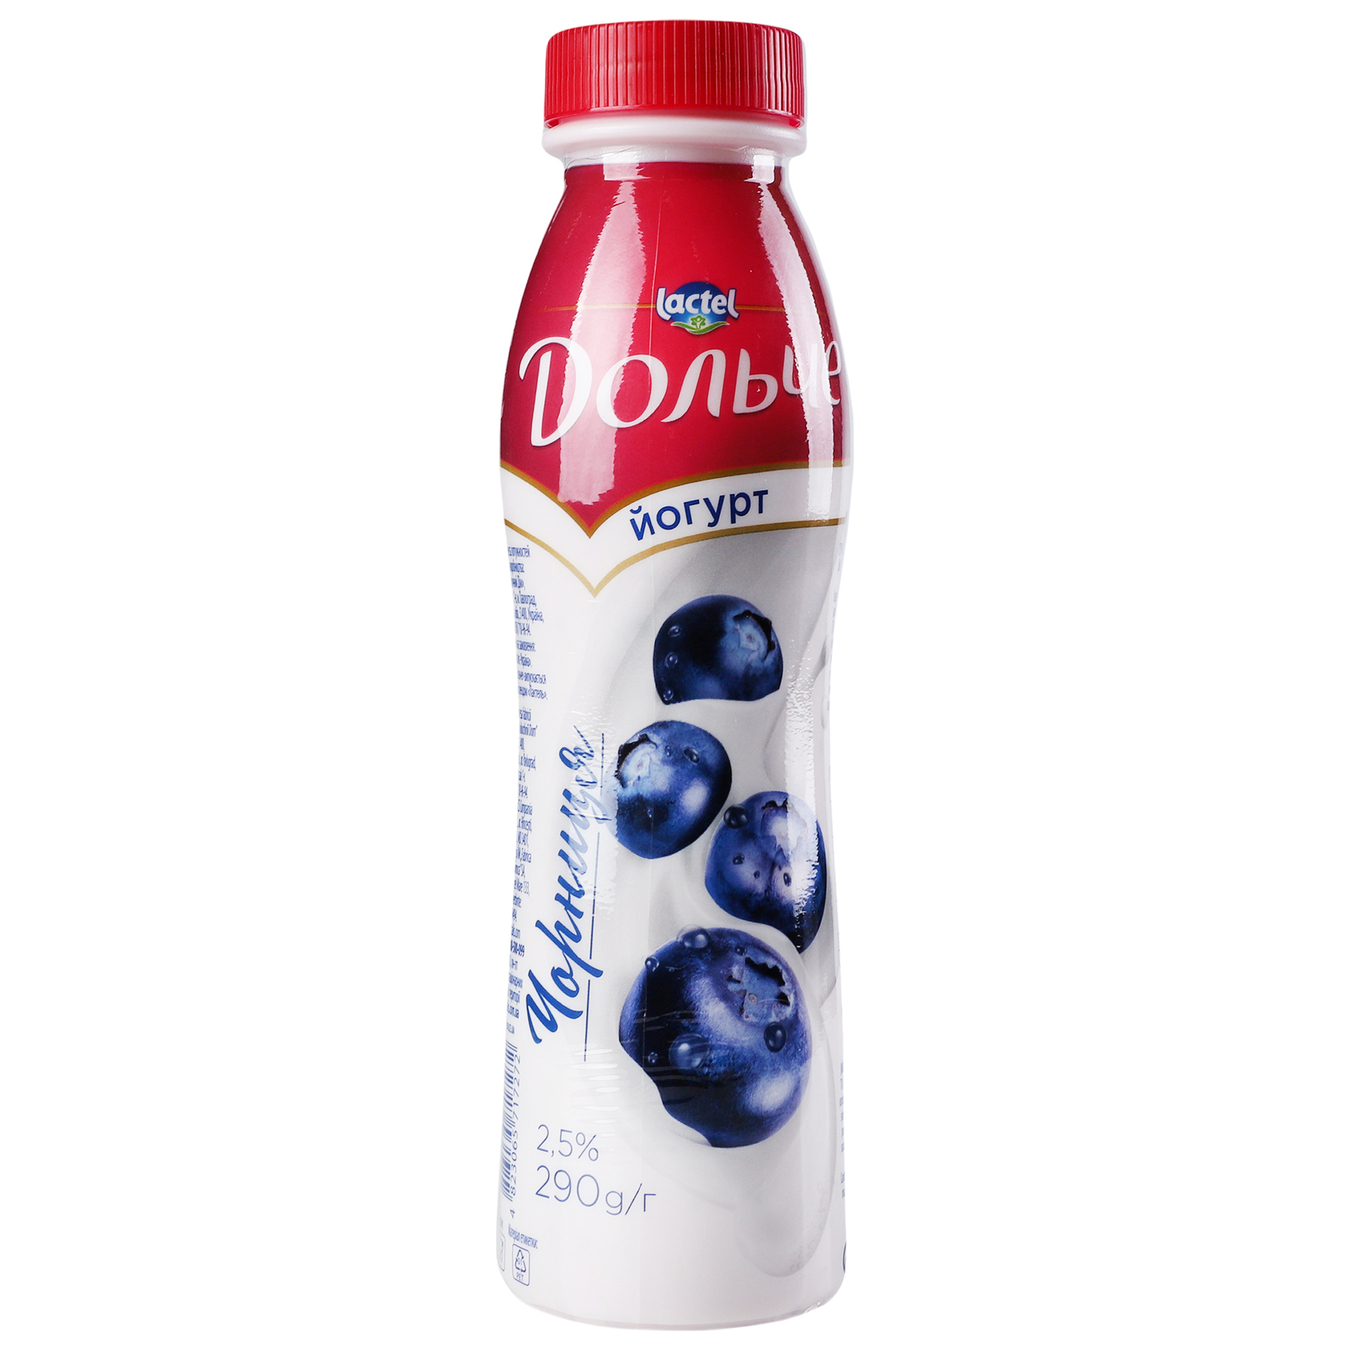 Lactel Dolce Bilberry Flavored Yogurt 2,5% 290g 2